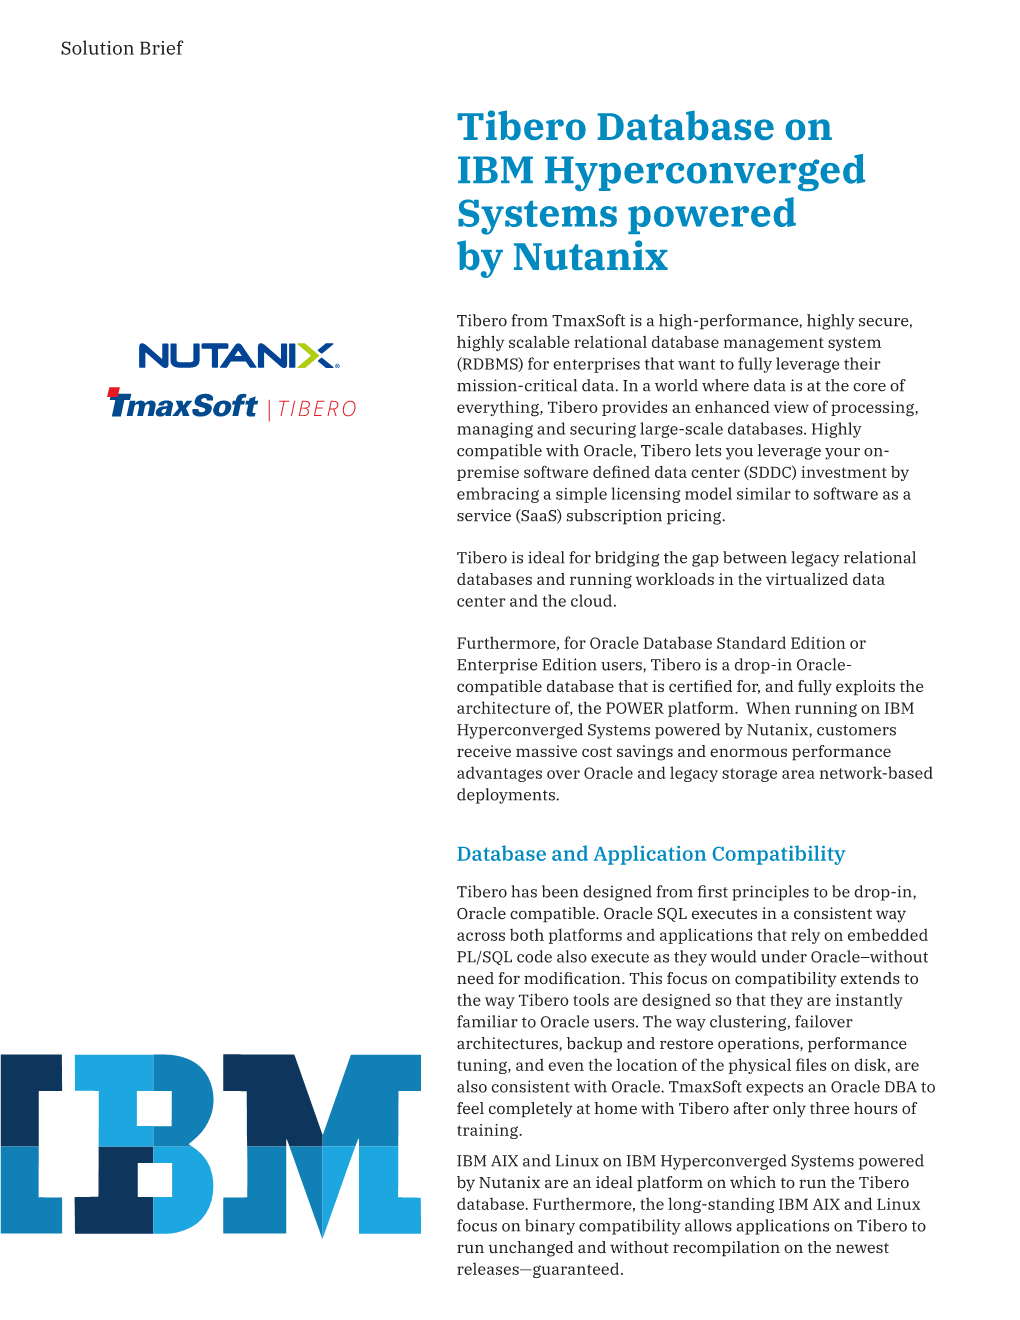 Tibero Database on IBM Hyperconverged Systems Powered by Nutanix